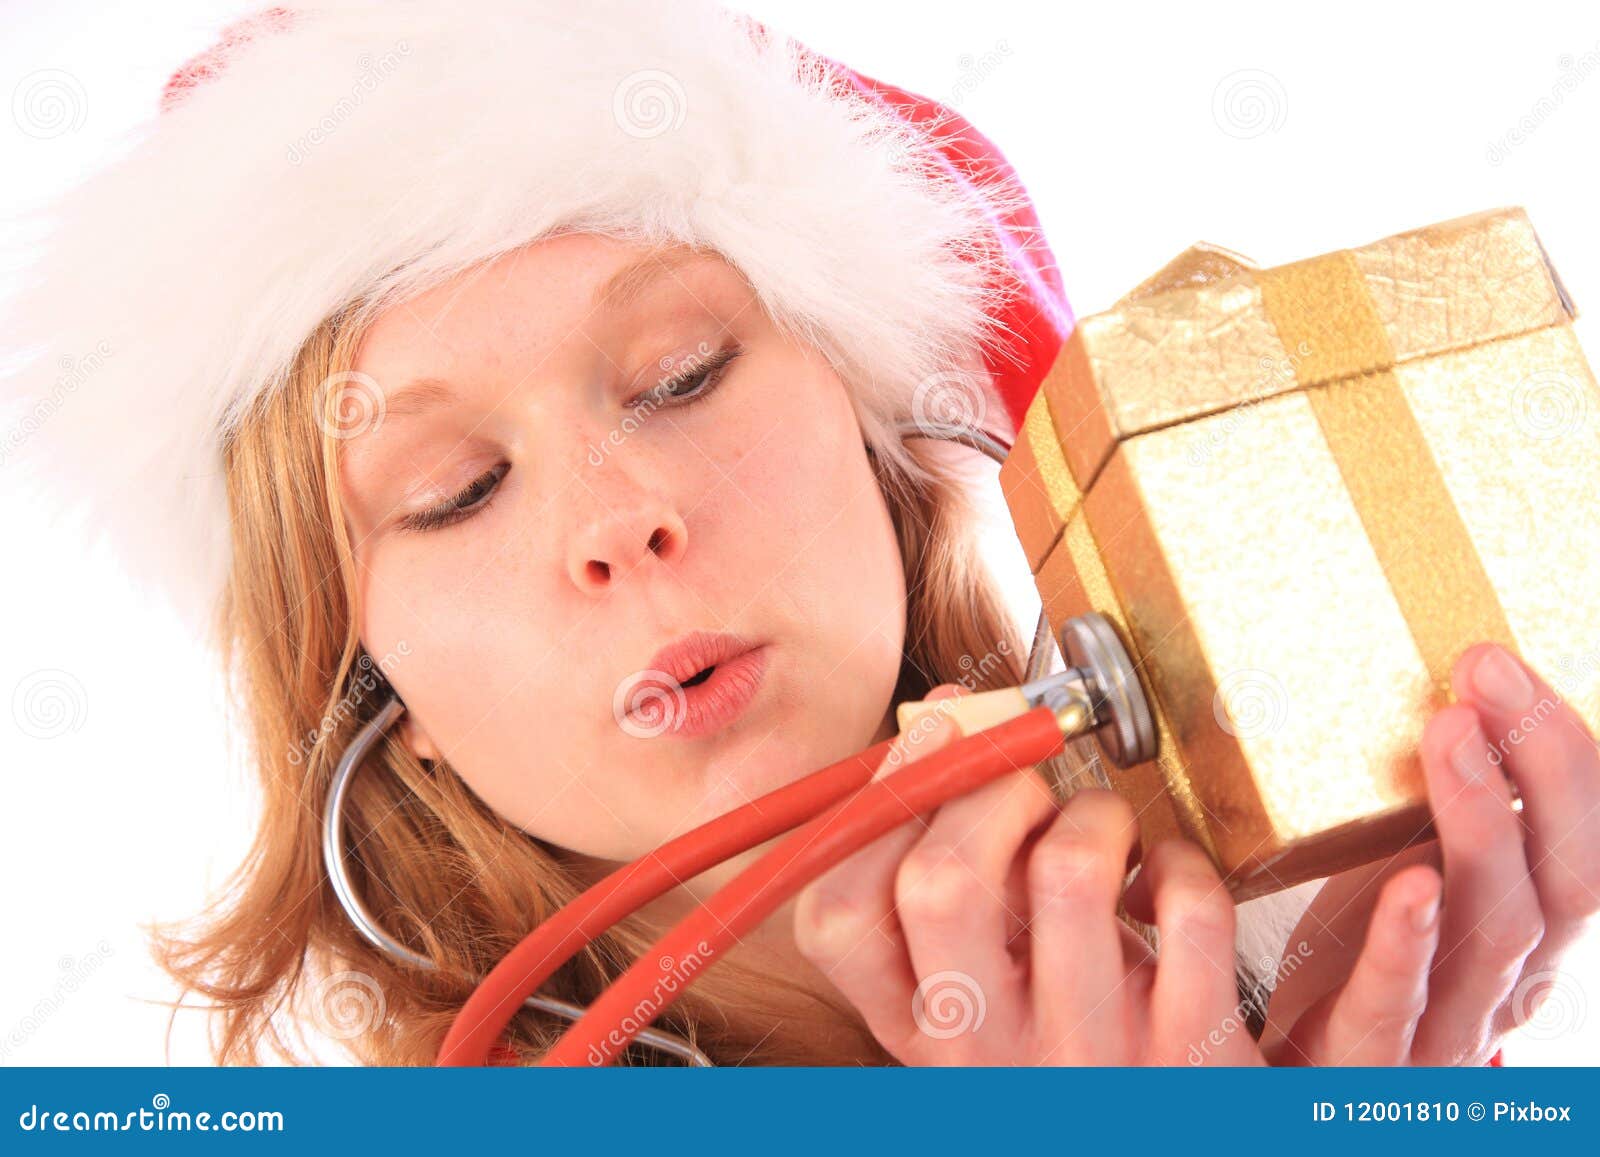 miss santa is sounding a golden gift box